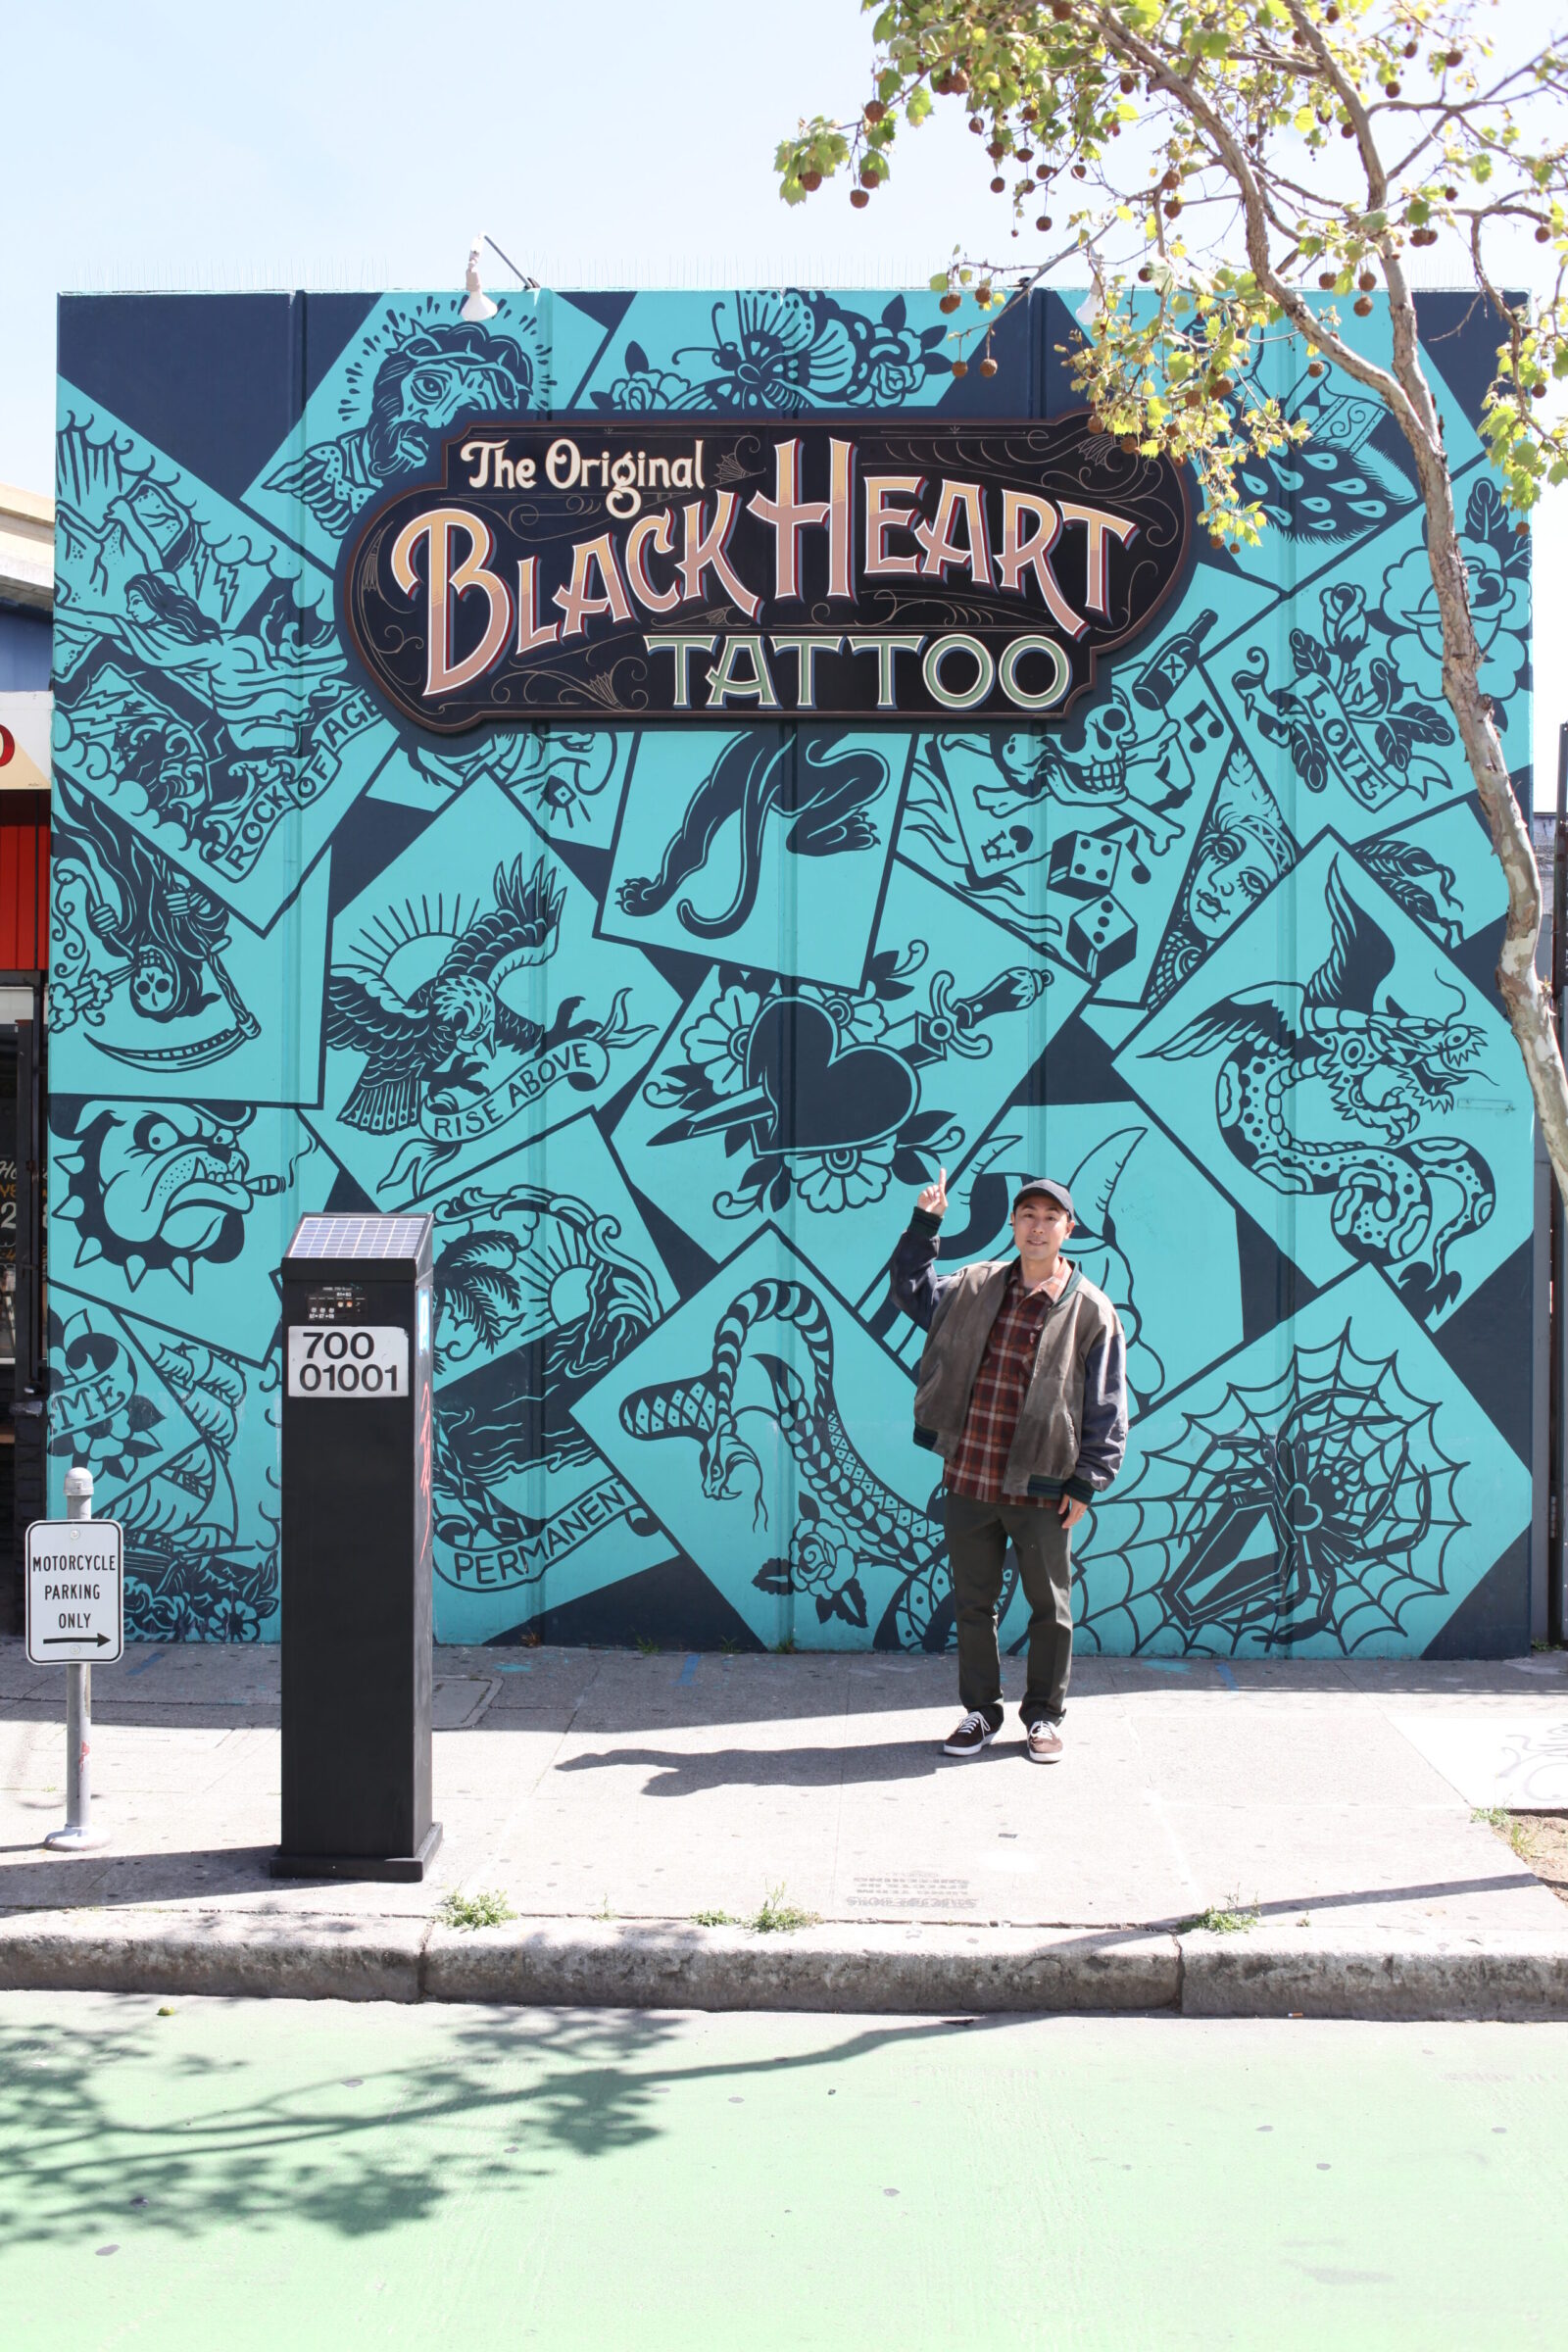 「Black Heart Tattoo」のサイン